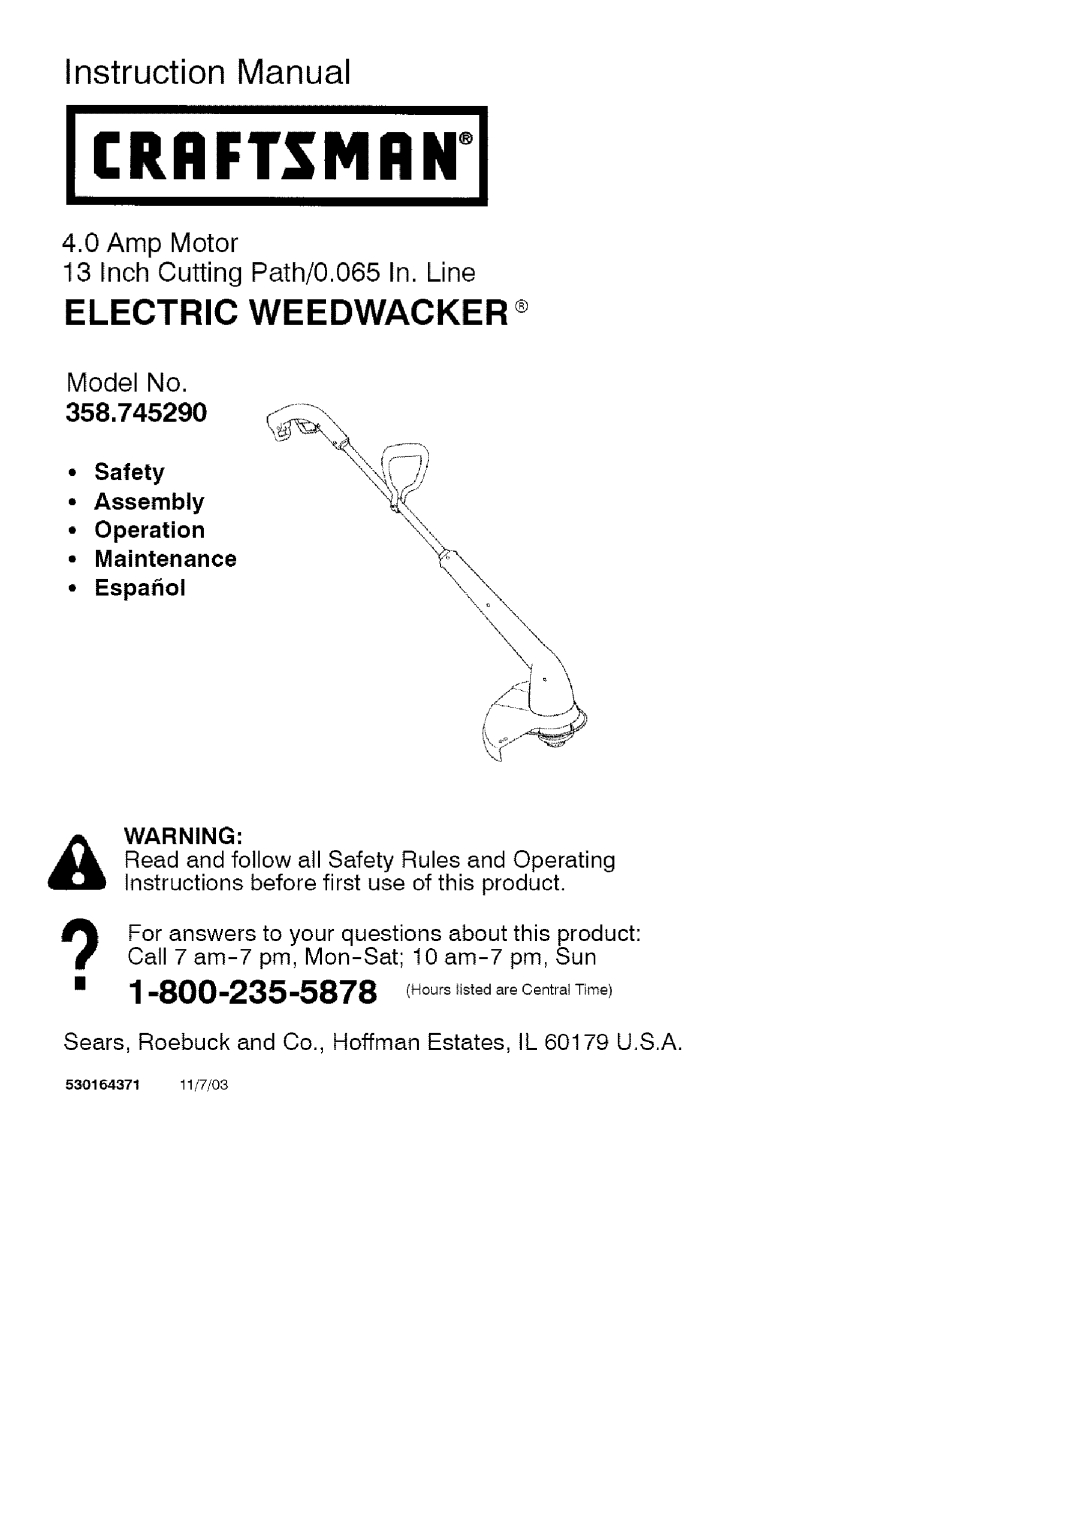 Craftsman instruction manual Inch Cutting Path/0.065 In. Line, Icraftsmani, Electric Weedwacker, 358.745290, Espar ol 